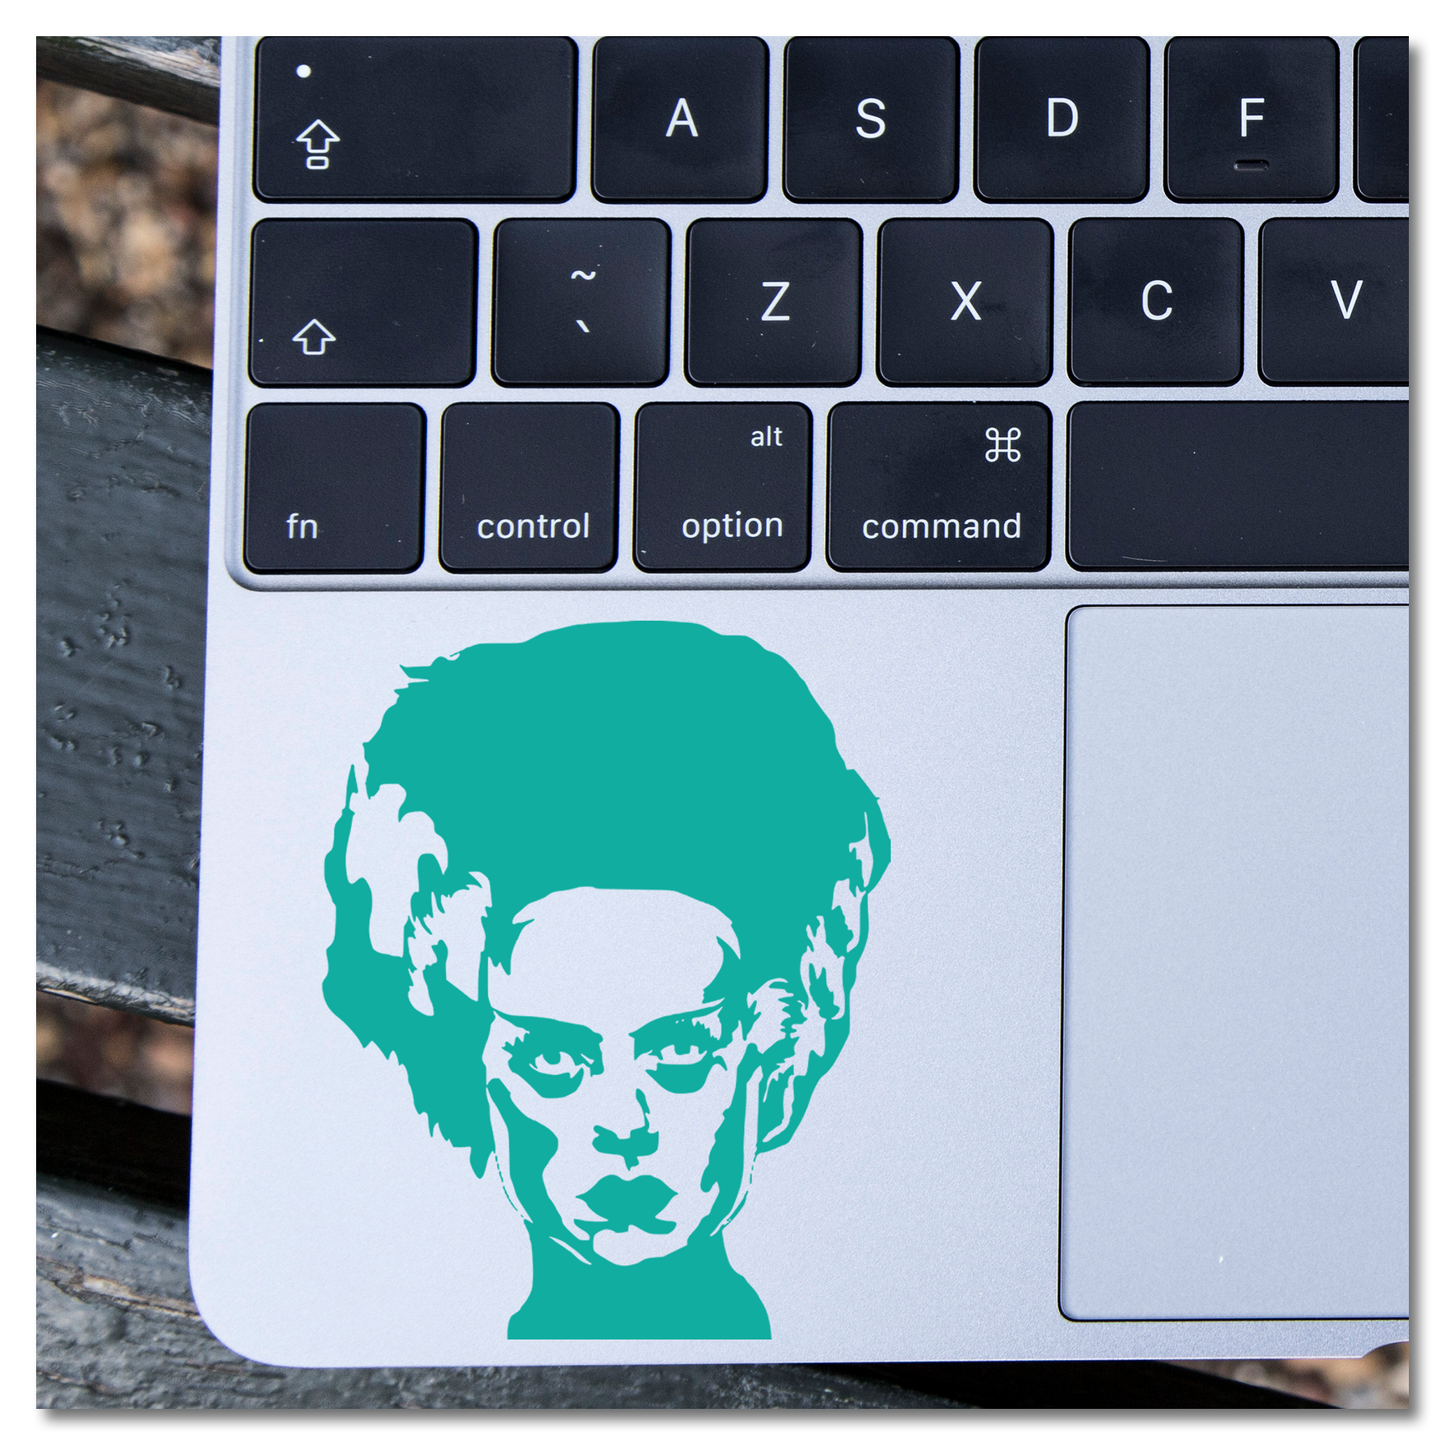 Bride of Frankenstein Classic Universal Horror Monster Vinyl Decal Sticker